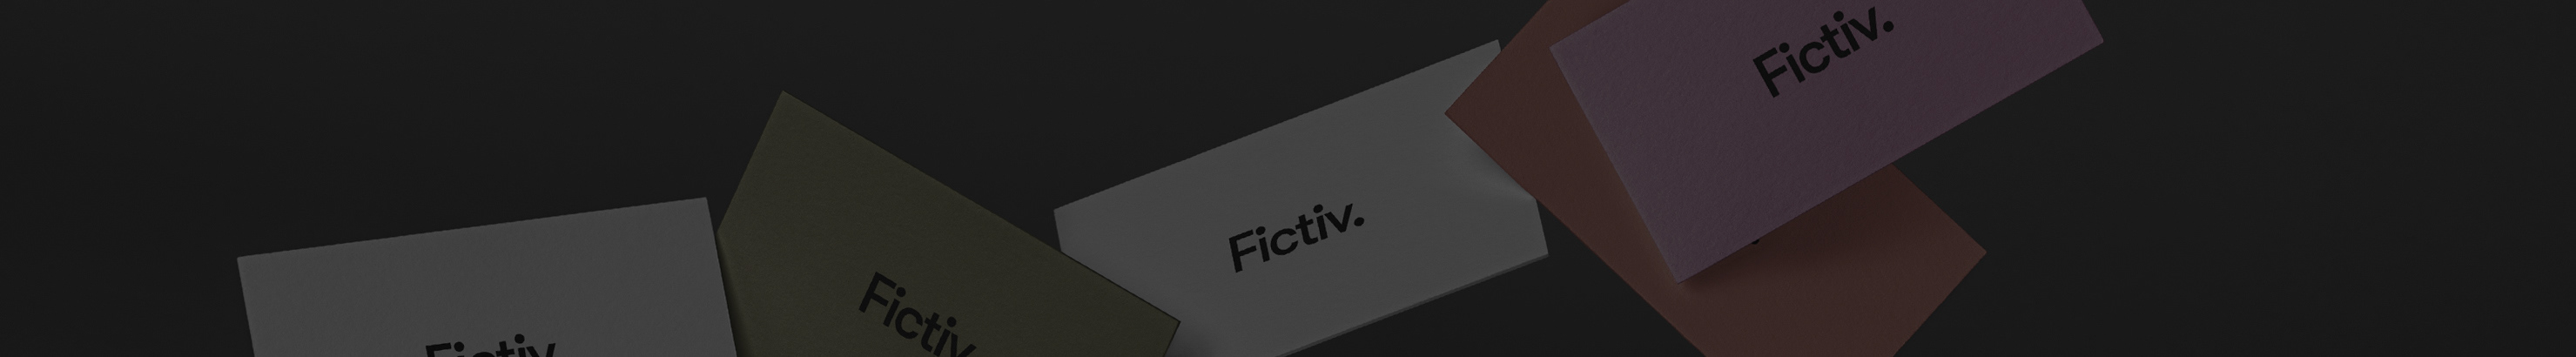 Fictiv Agency's profile banner